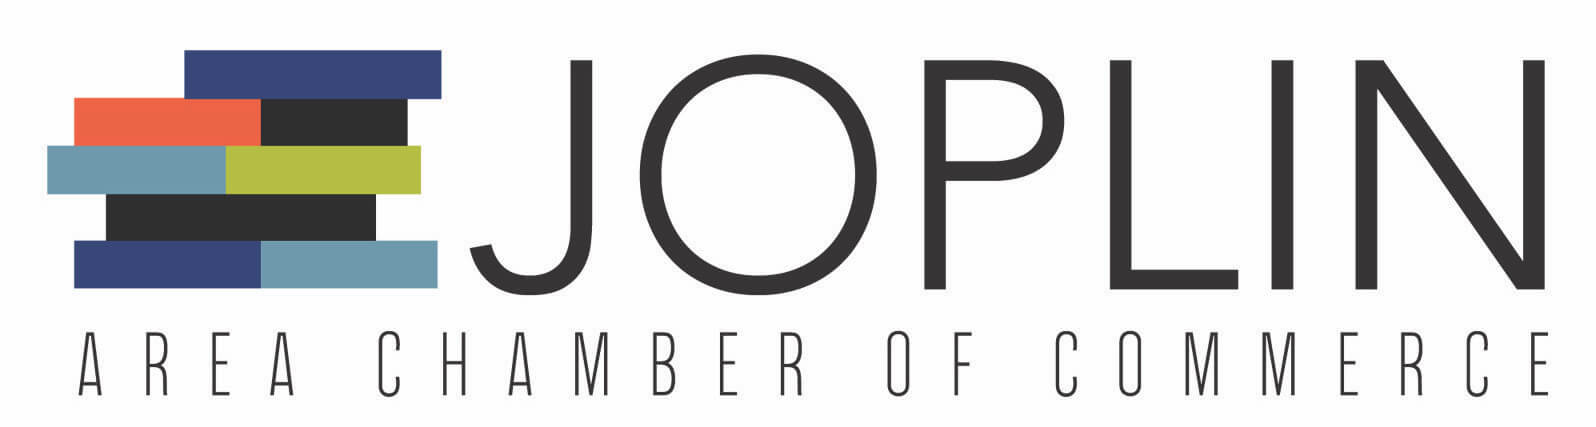 joplin-area-chamber-of-commerce-4